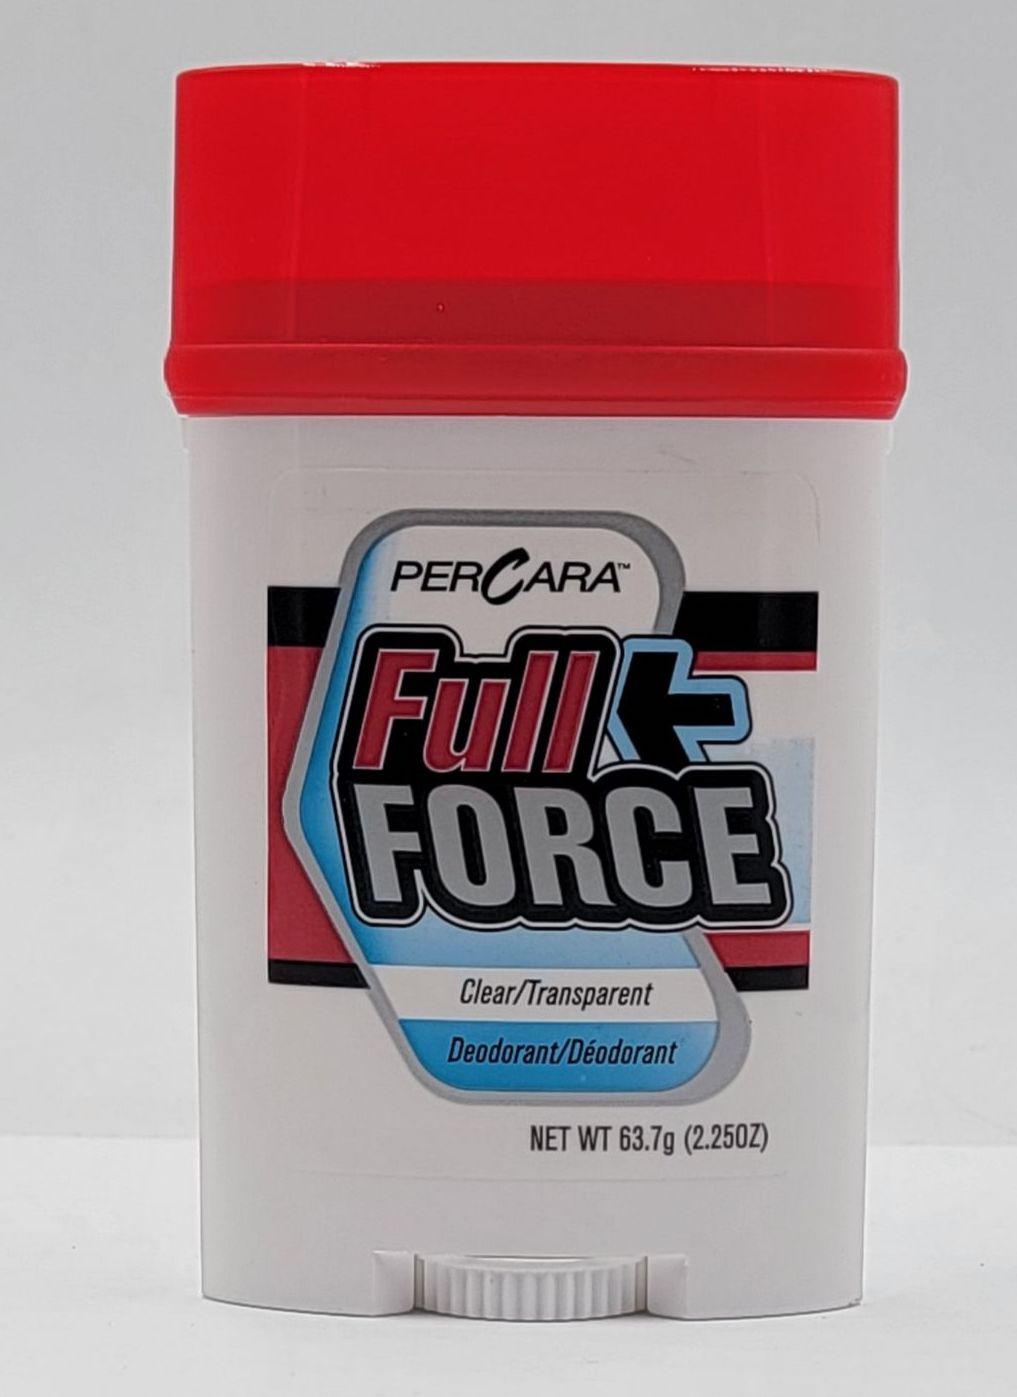 Desodorante Per Cara Full Force 2.25 oz